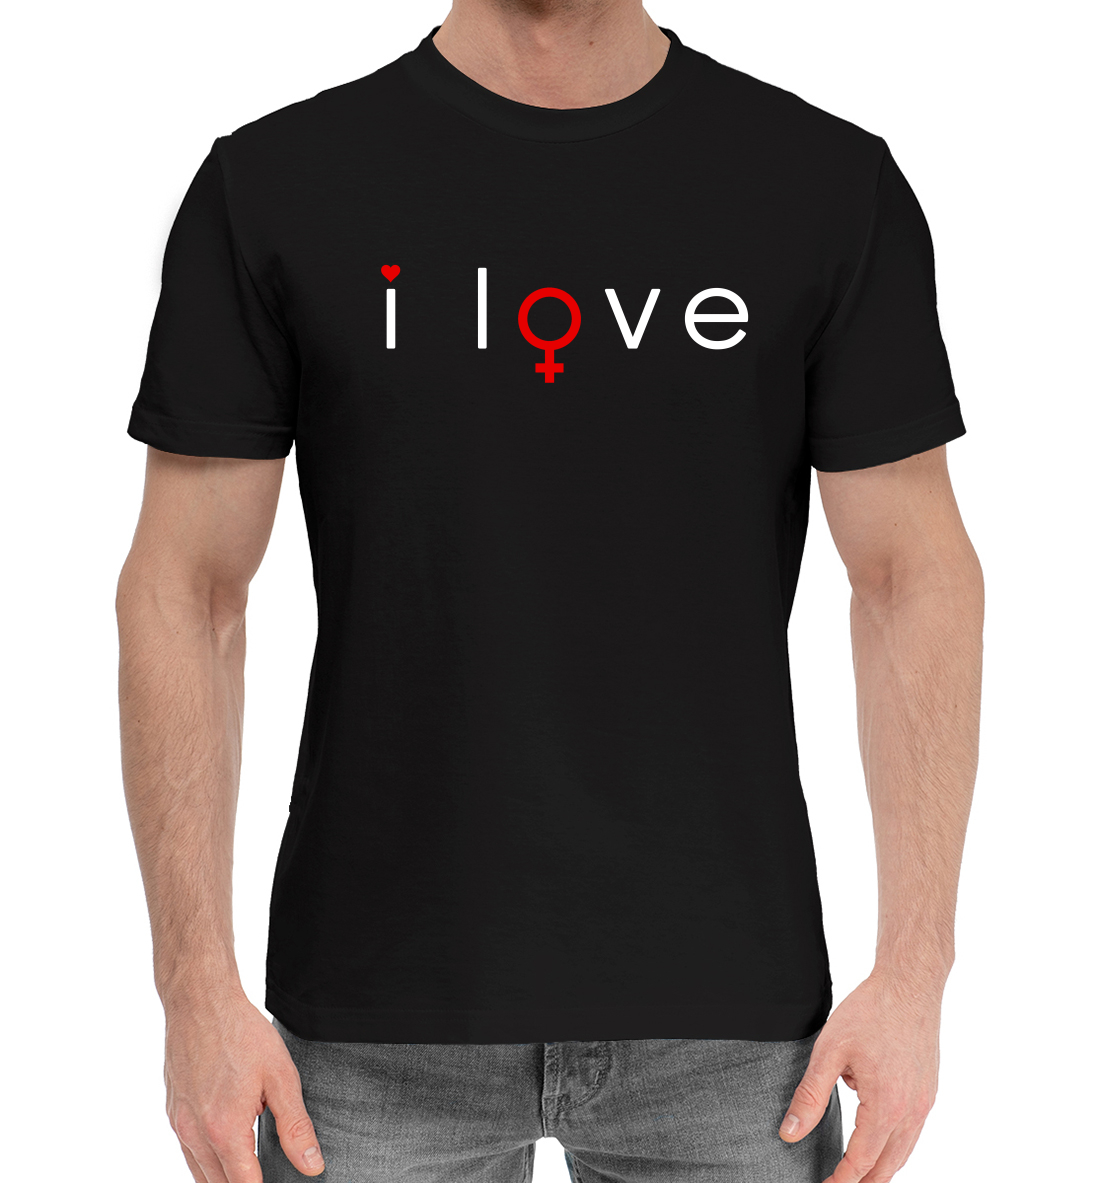 Мужская Хлопковая футболка с принтом I love, артикул 14F-317112-hfu-2mp